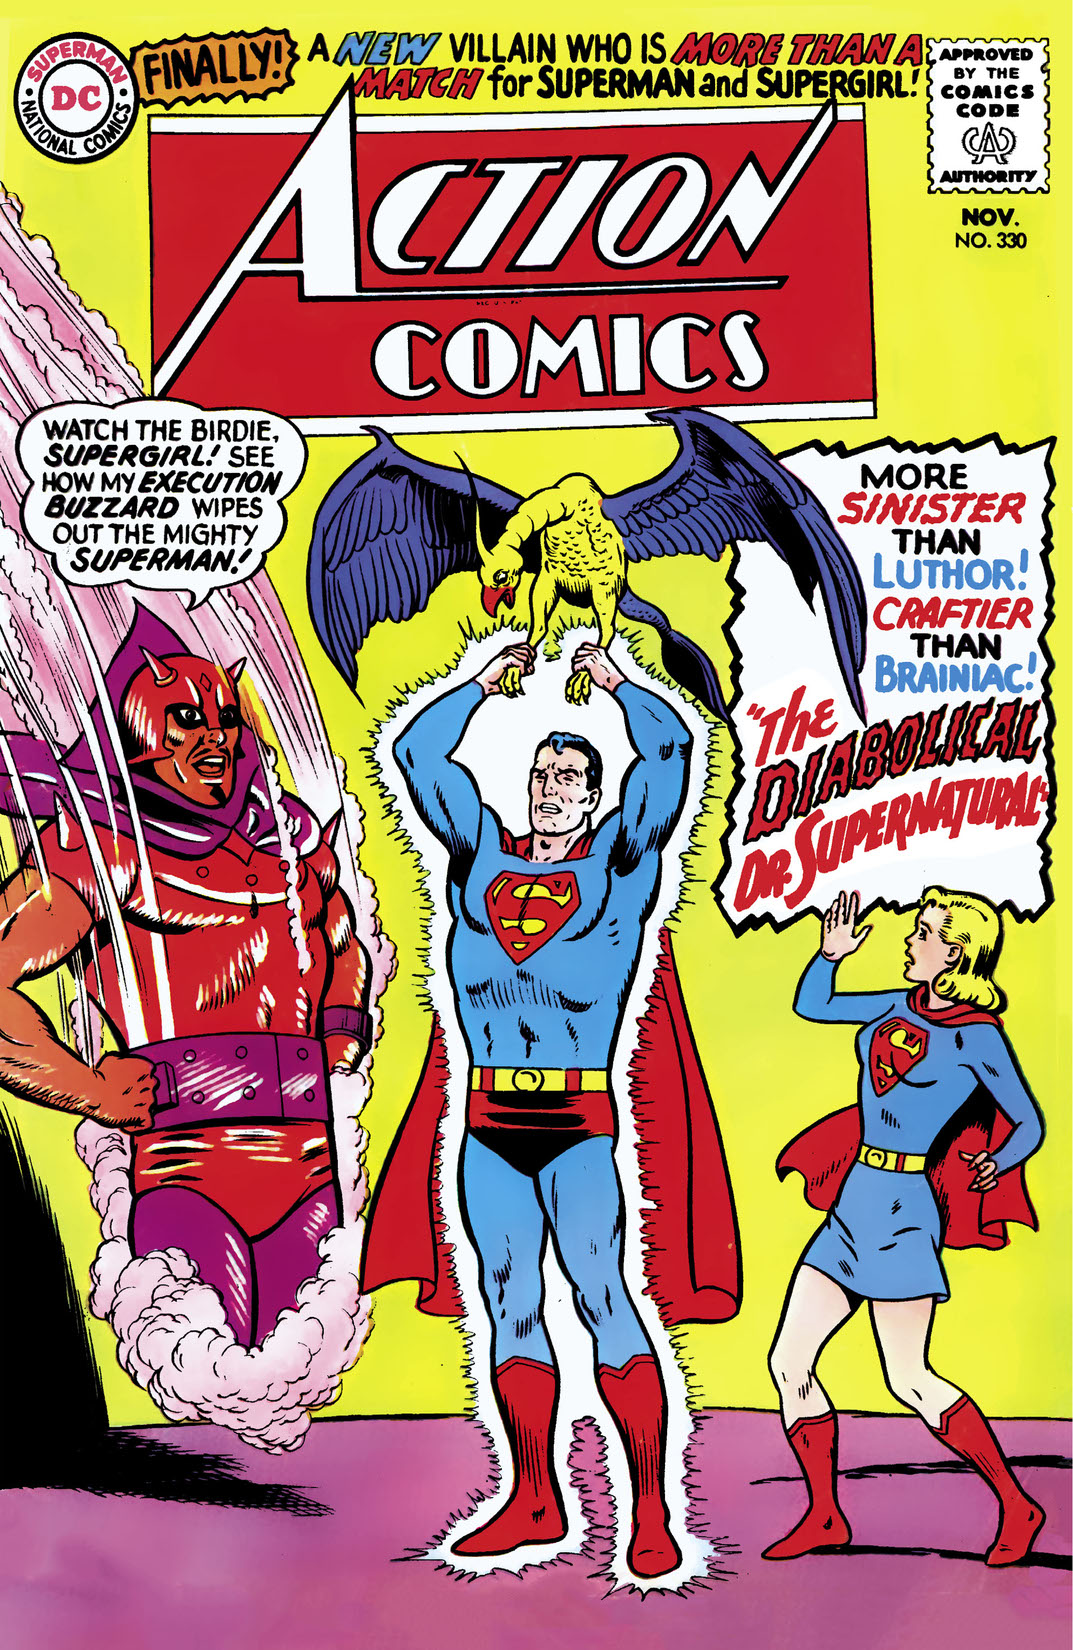 Action Comics (1938-) #330 preview images